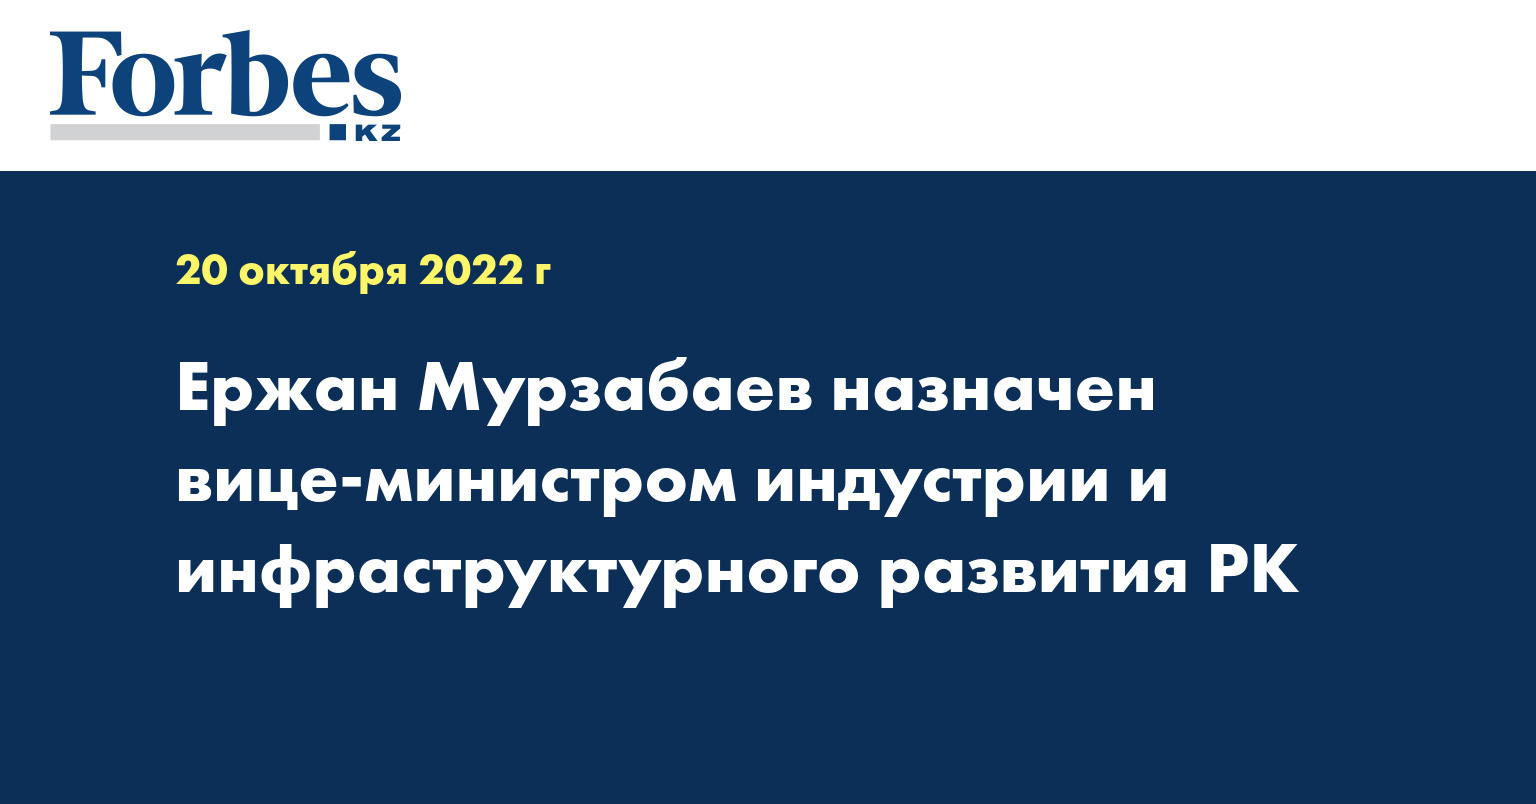 Ержан Мурзабаев назначен вице-министром индустрии и инфраструктурного развития РК